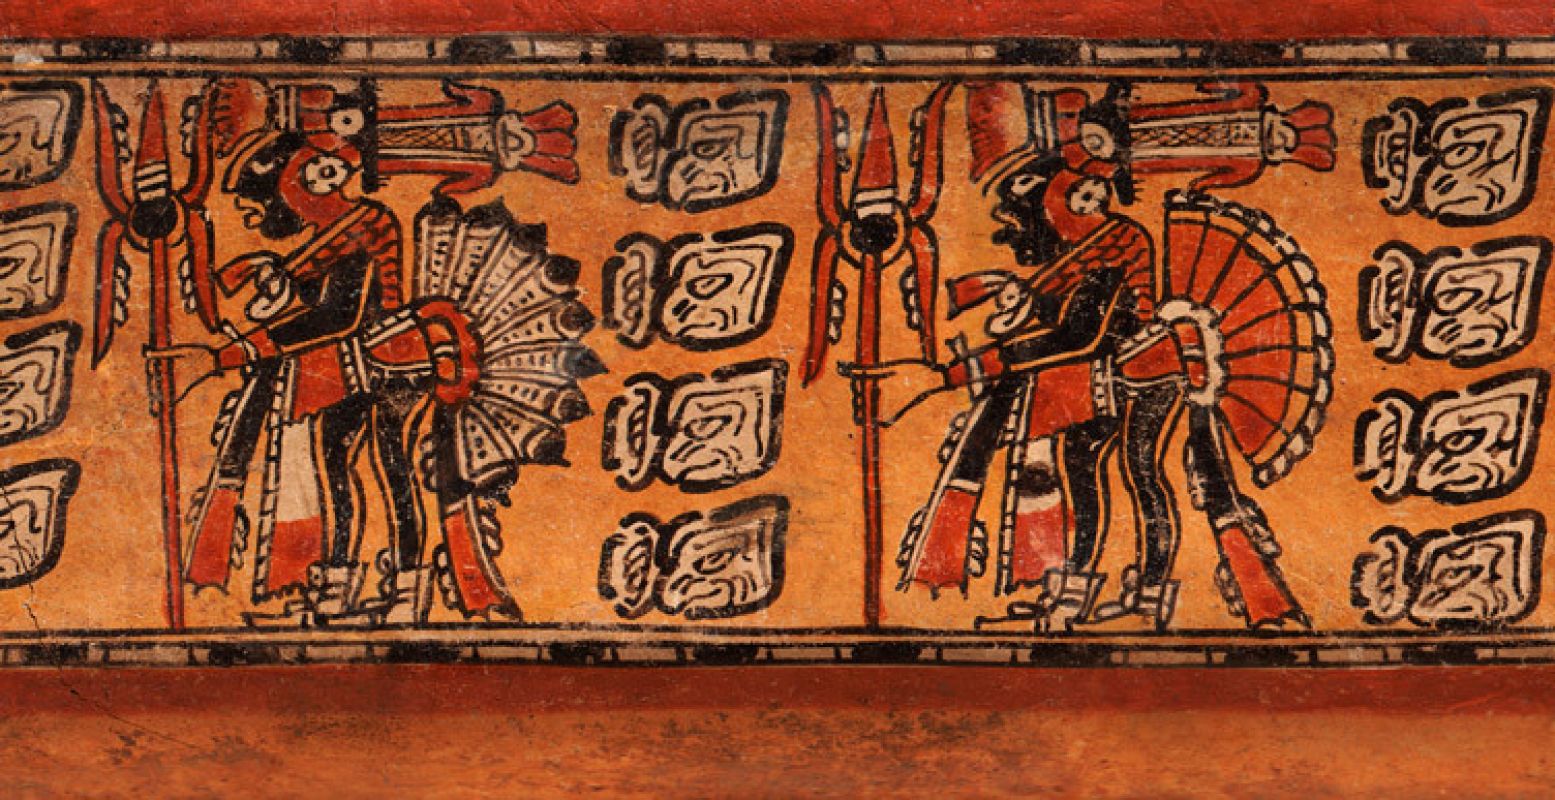 Rollout van een vaas met 4 krijgers, 600 - 900 na Christus, keramiek, collectie: Fundaciân La Ruta Maya, Guatemala